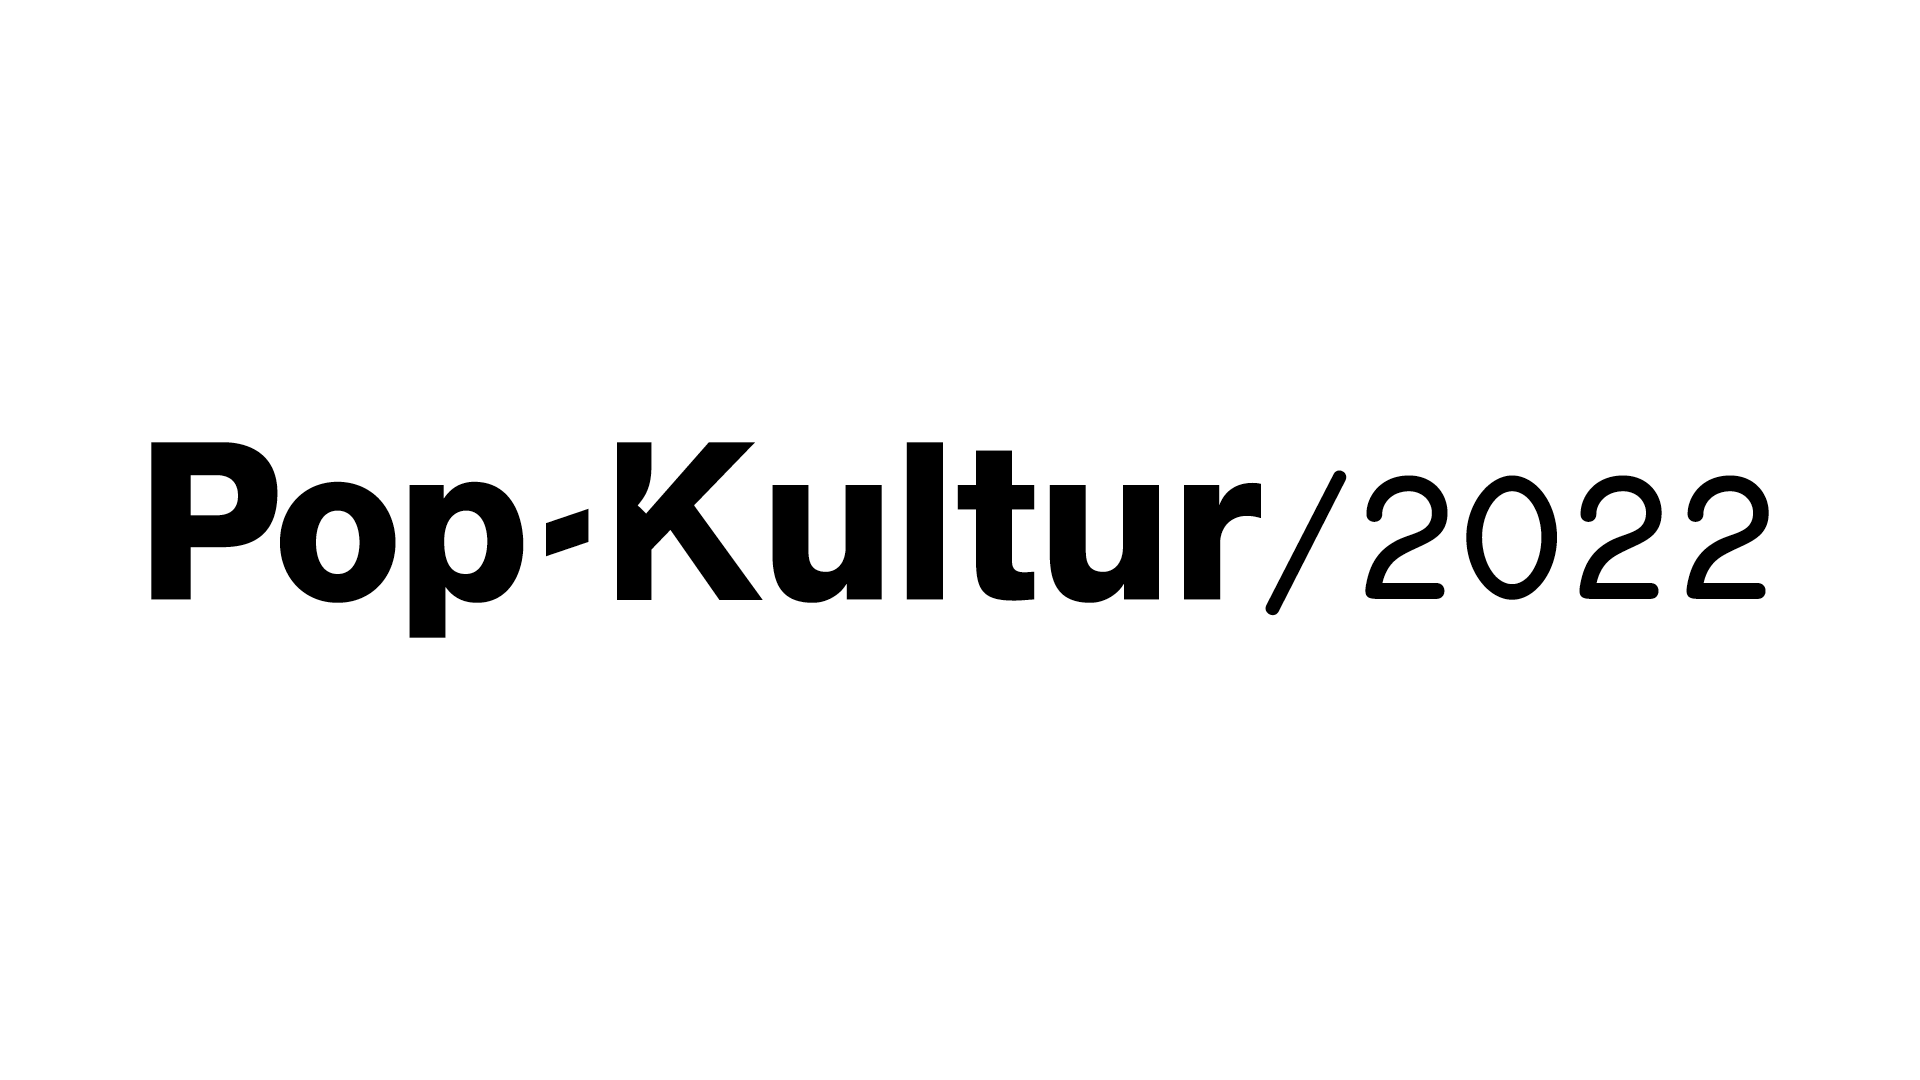 Pop-Kultur 2022 Logo black white background